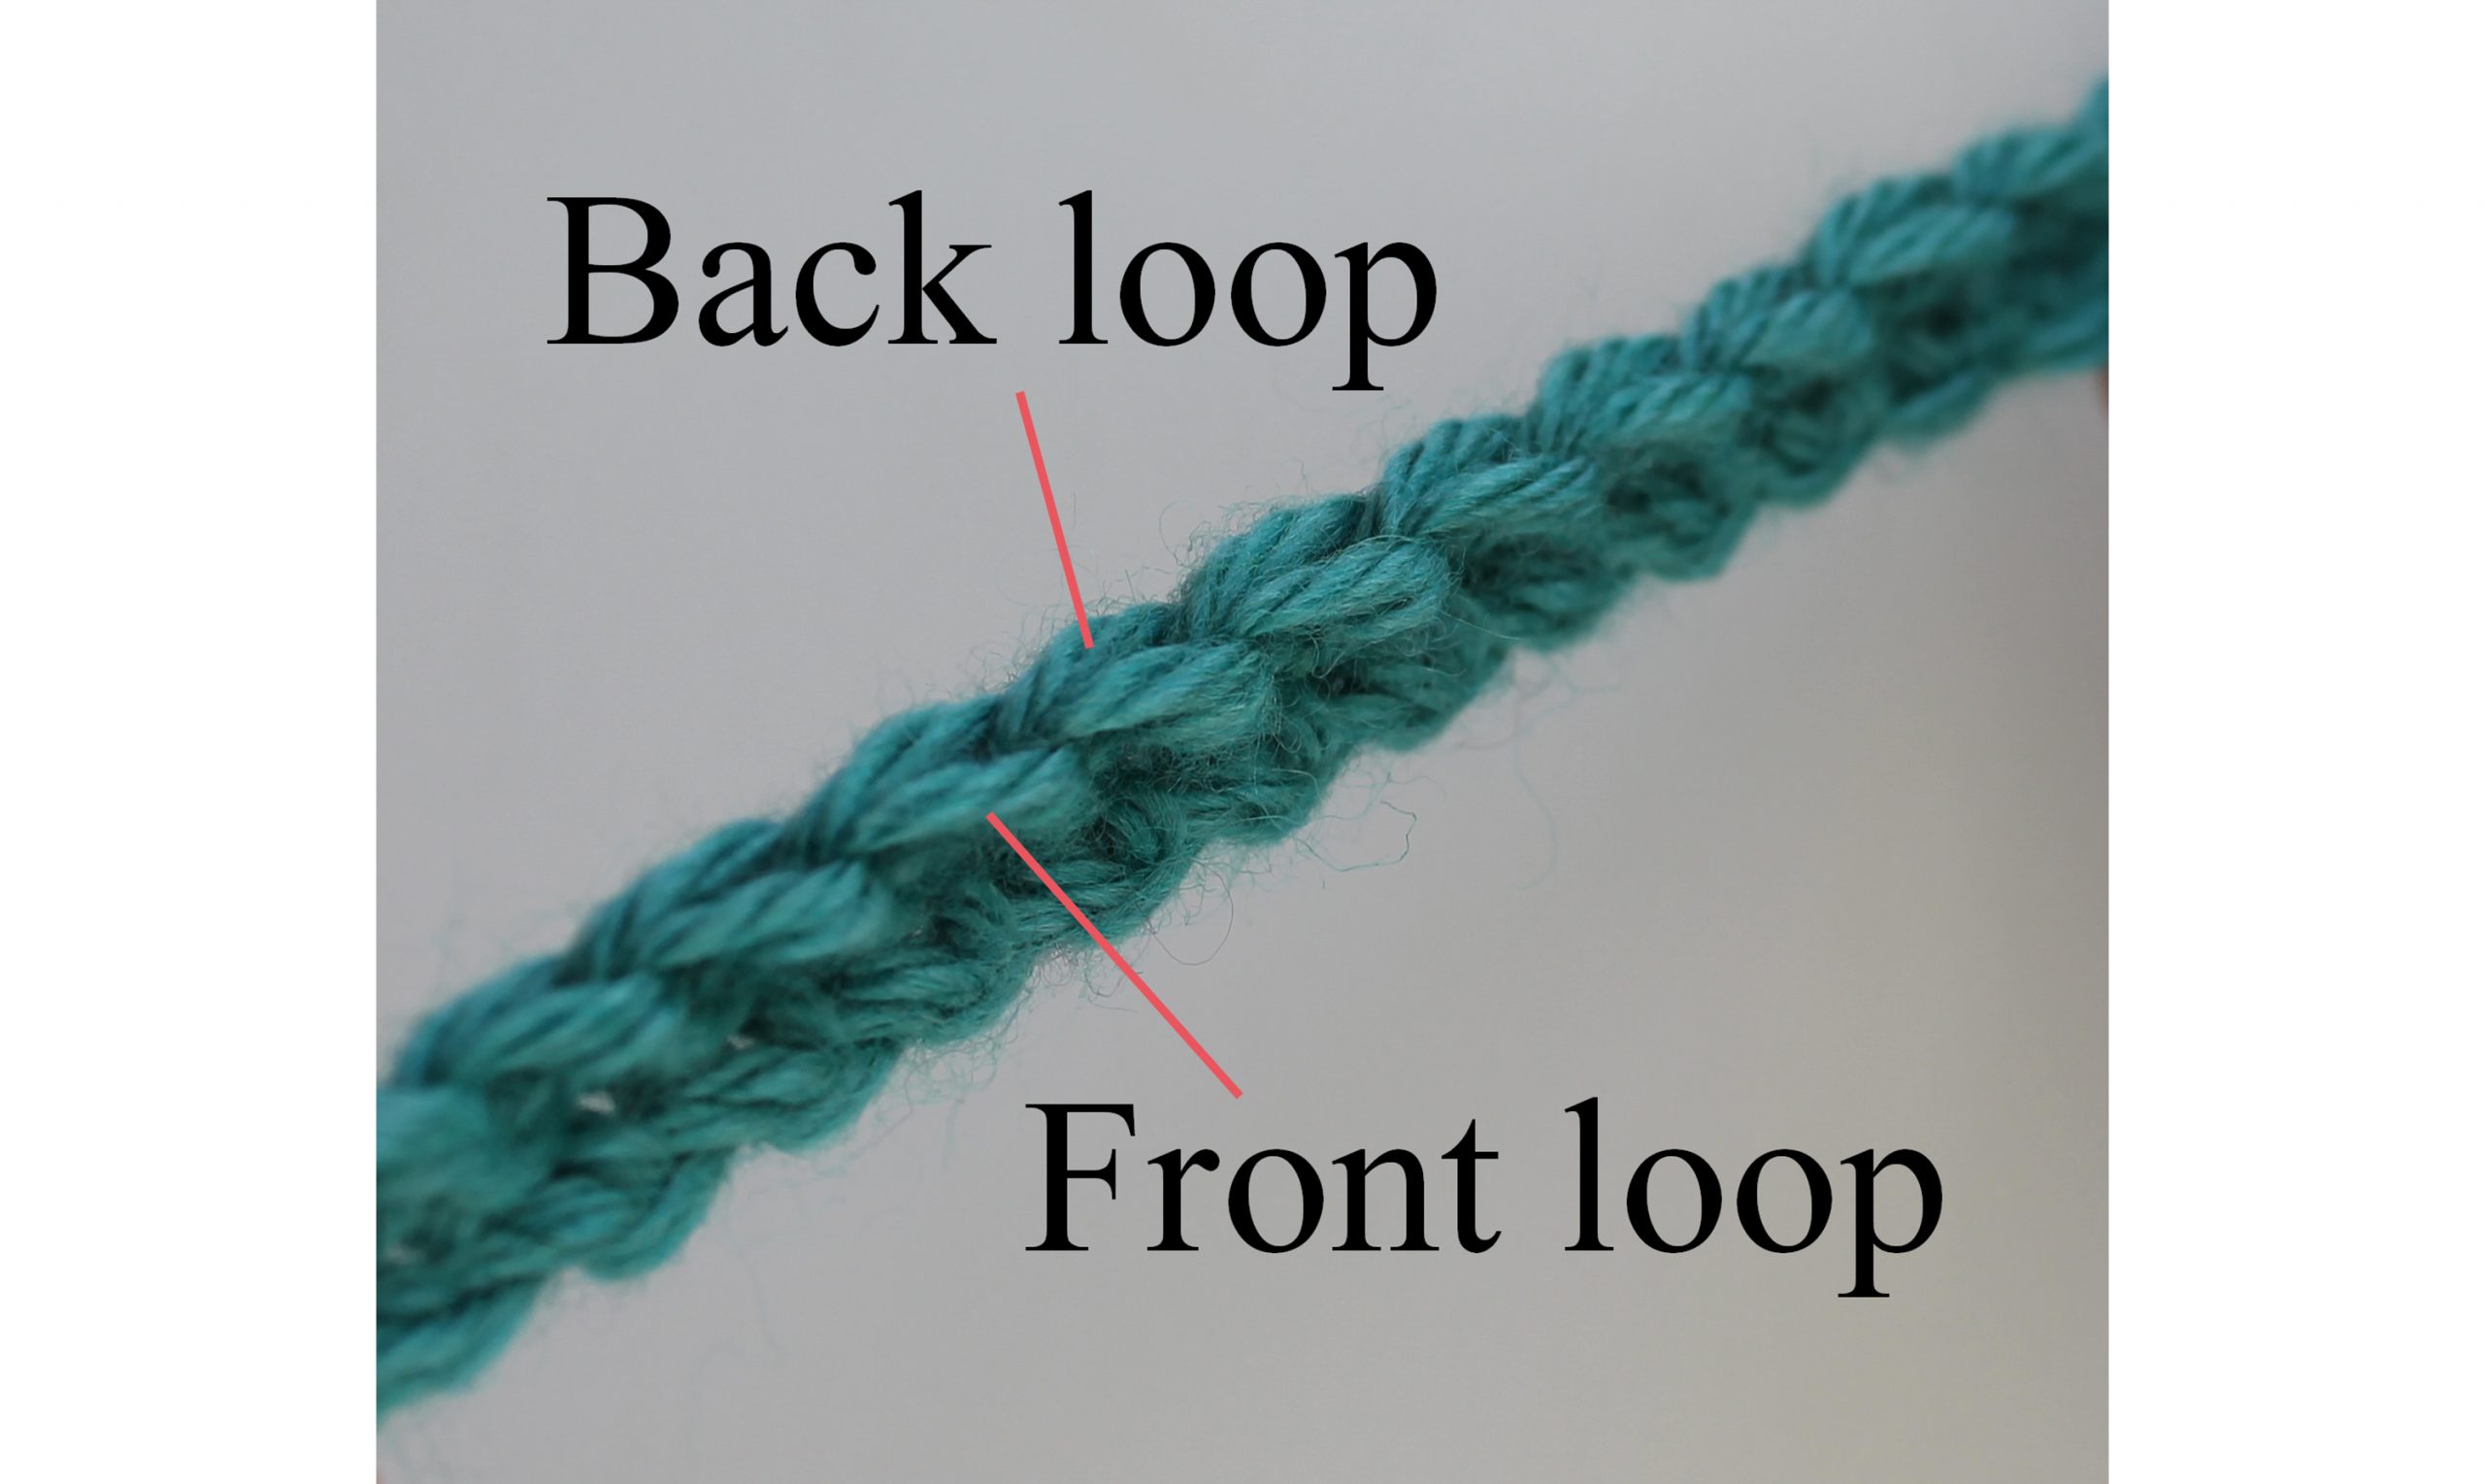 https://d2culxnxbccemt.cloudfront.net/craft/content/uploads/2014/05/24121753/back-loop-anatomy-crochet-1-scaled.jpg